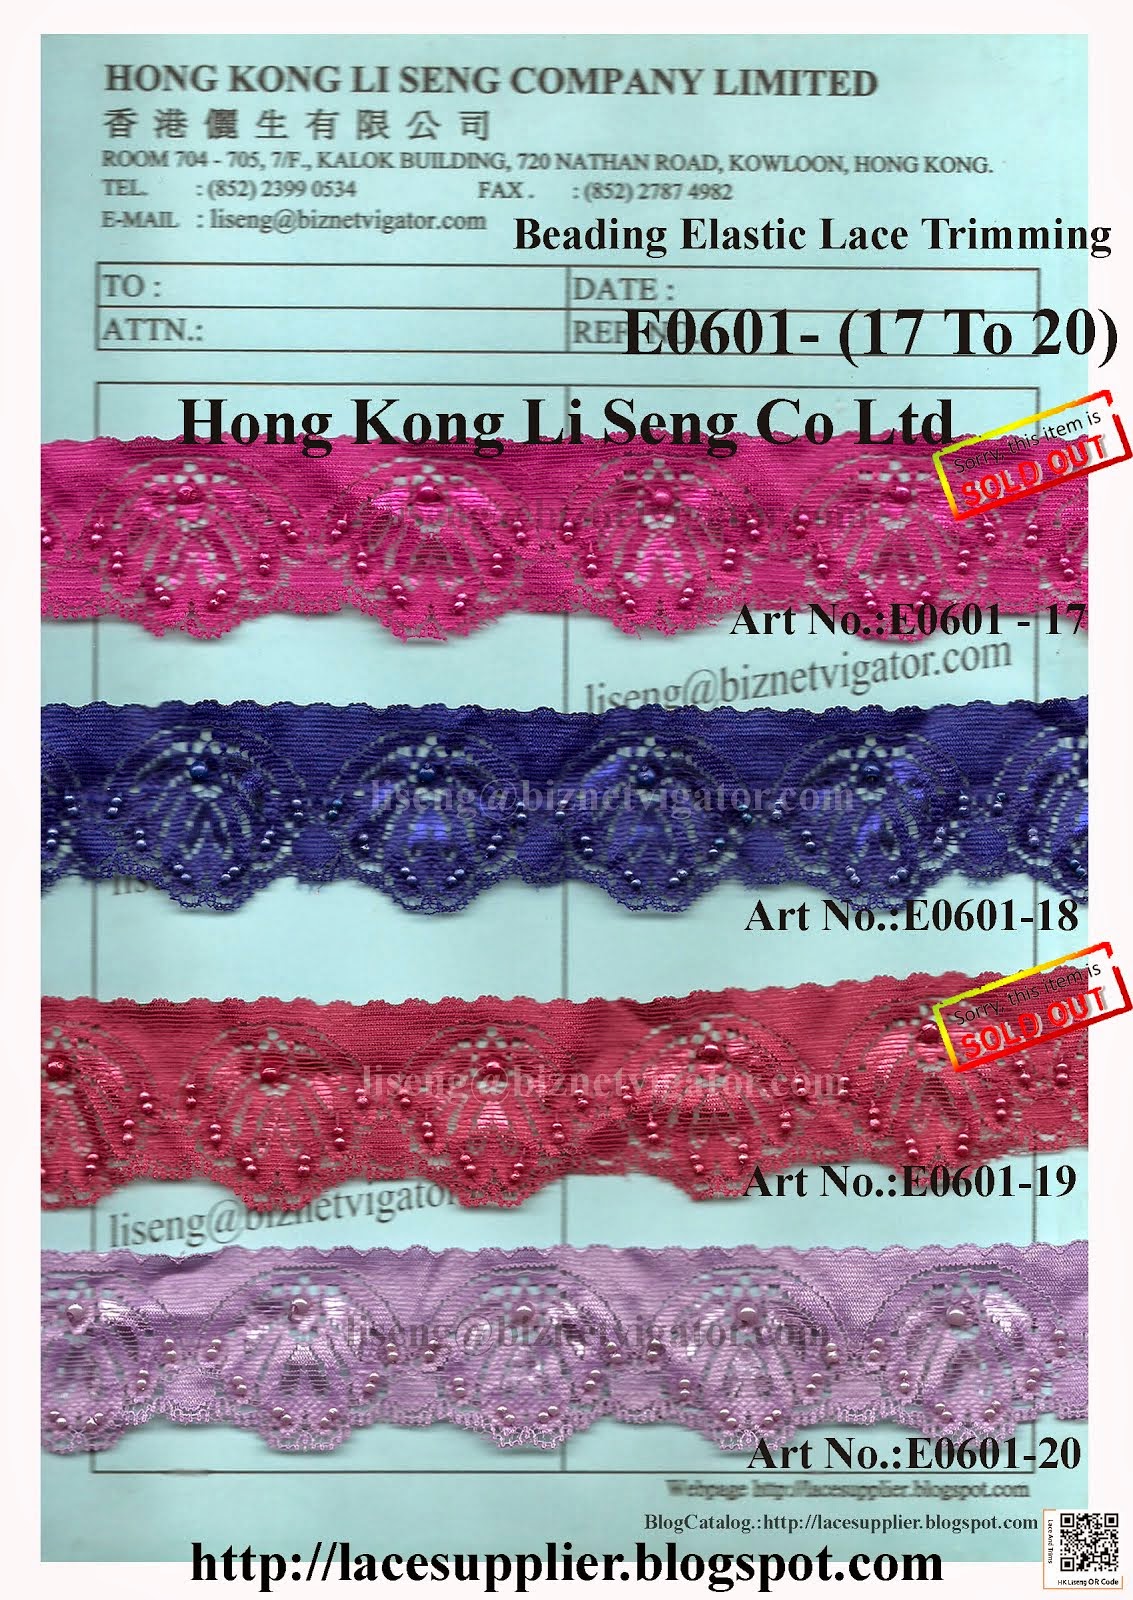 Beading Elastic Lace Trimming Manufacturer - Hong Kong Li Seng Co Ltd